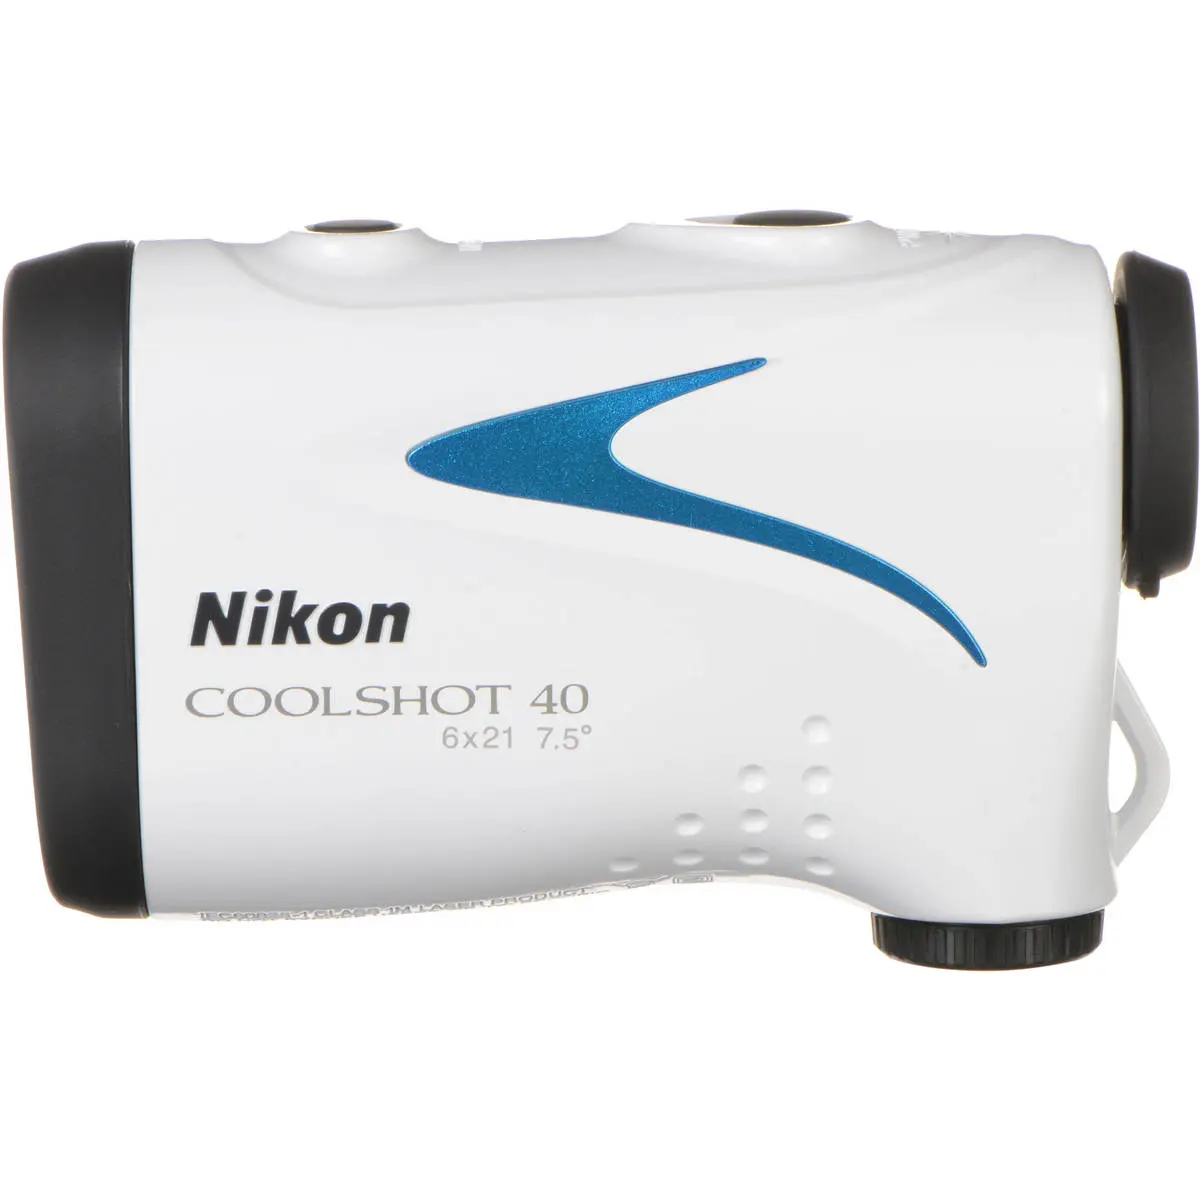 3. Nikon Coolshot 40 Golf Laser Rangefinder